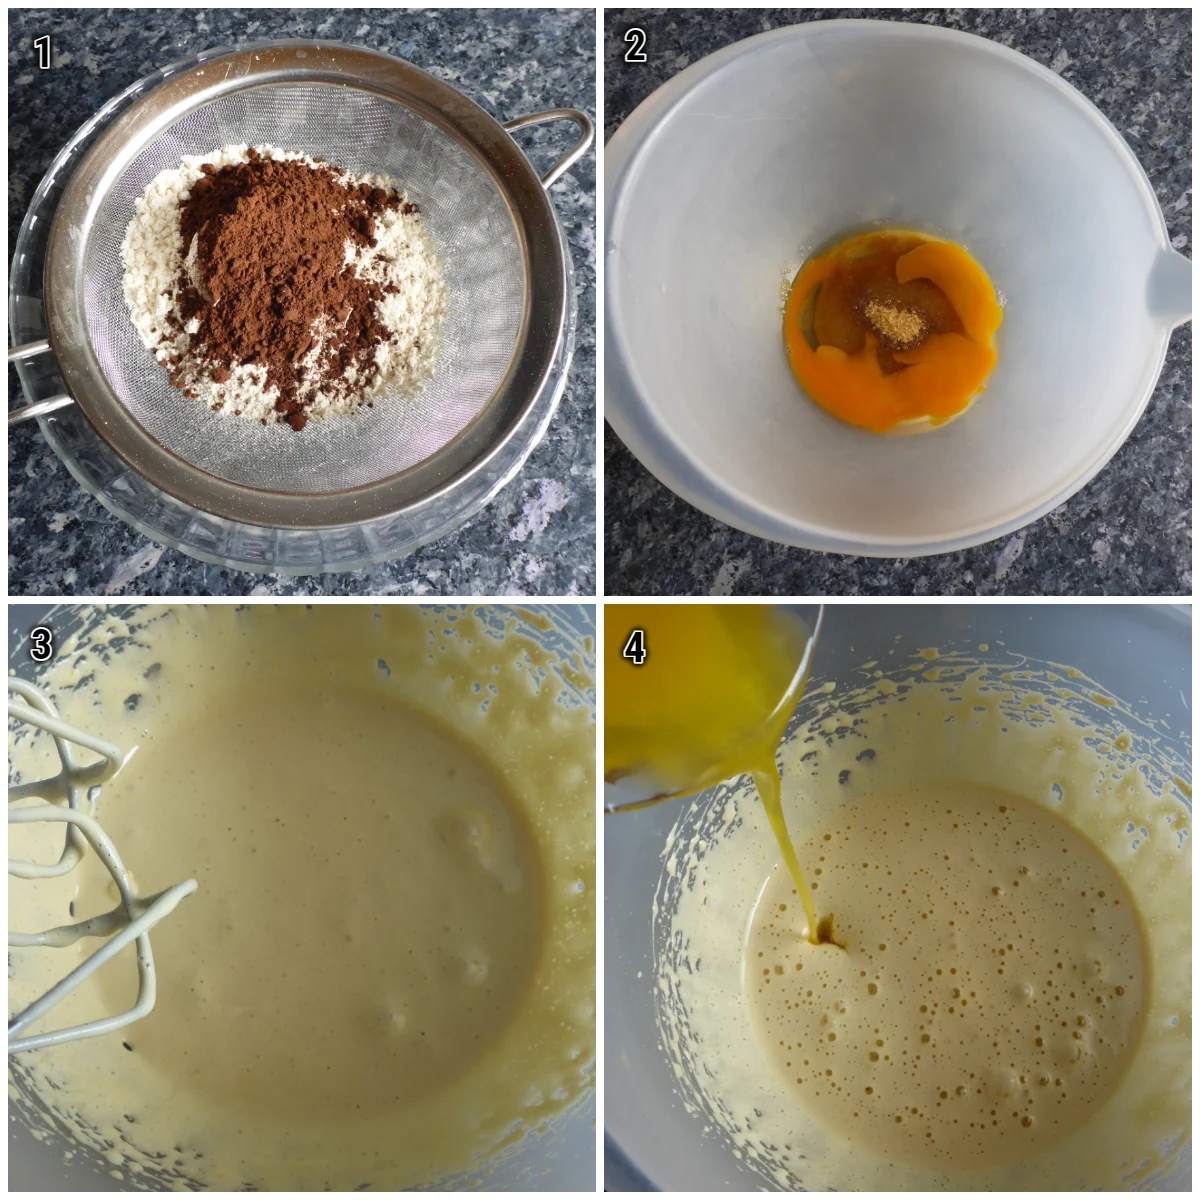 How to make malva pudding batter